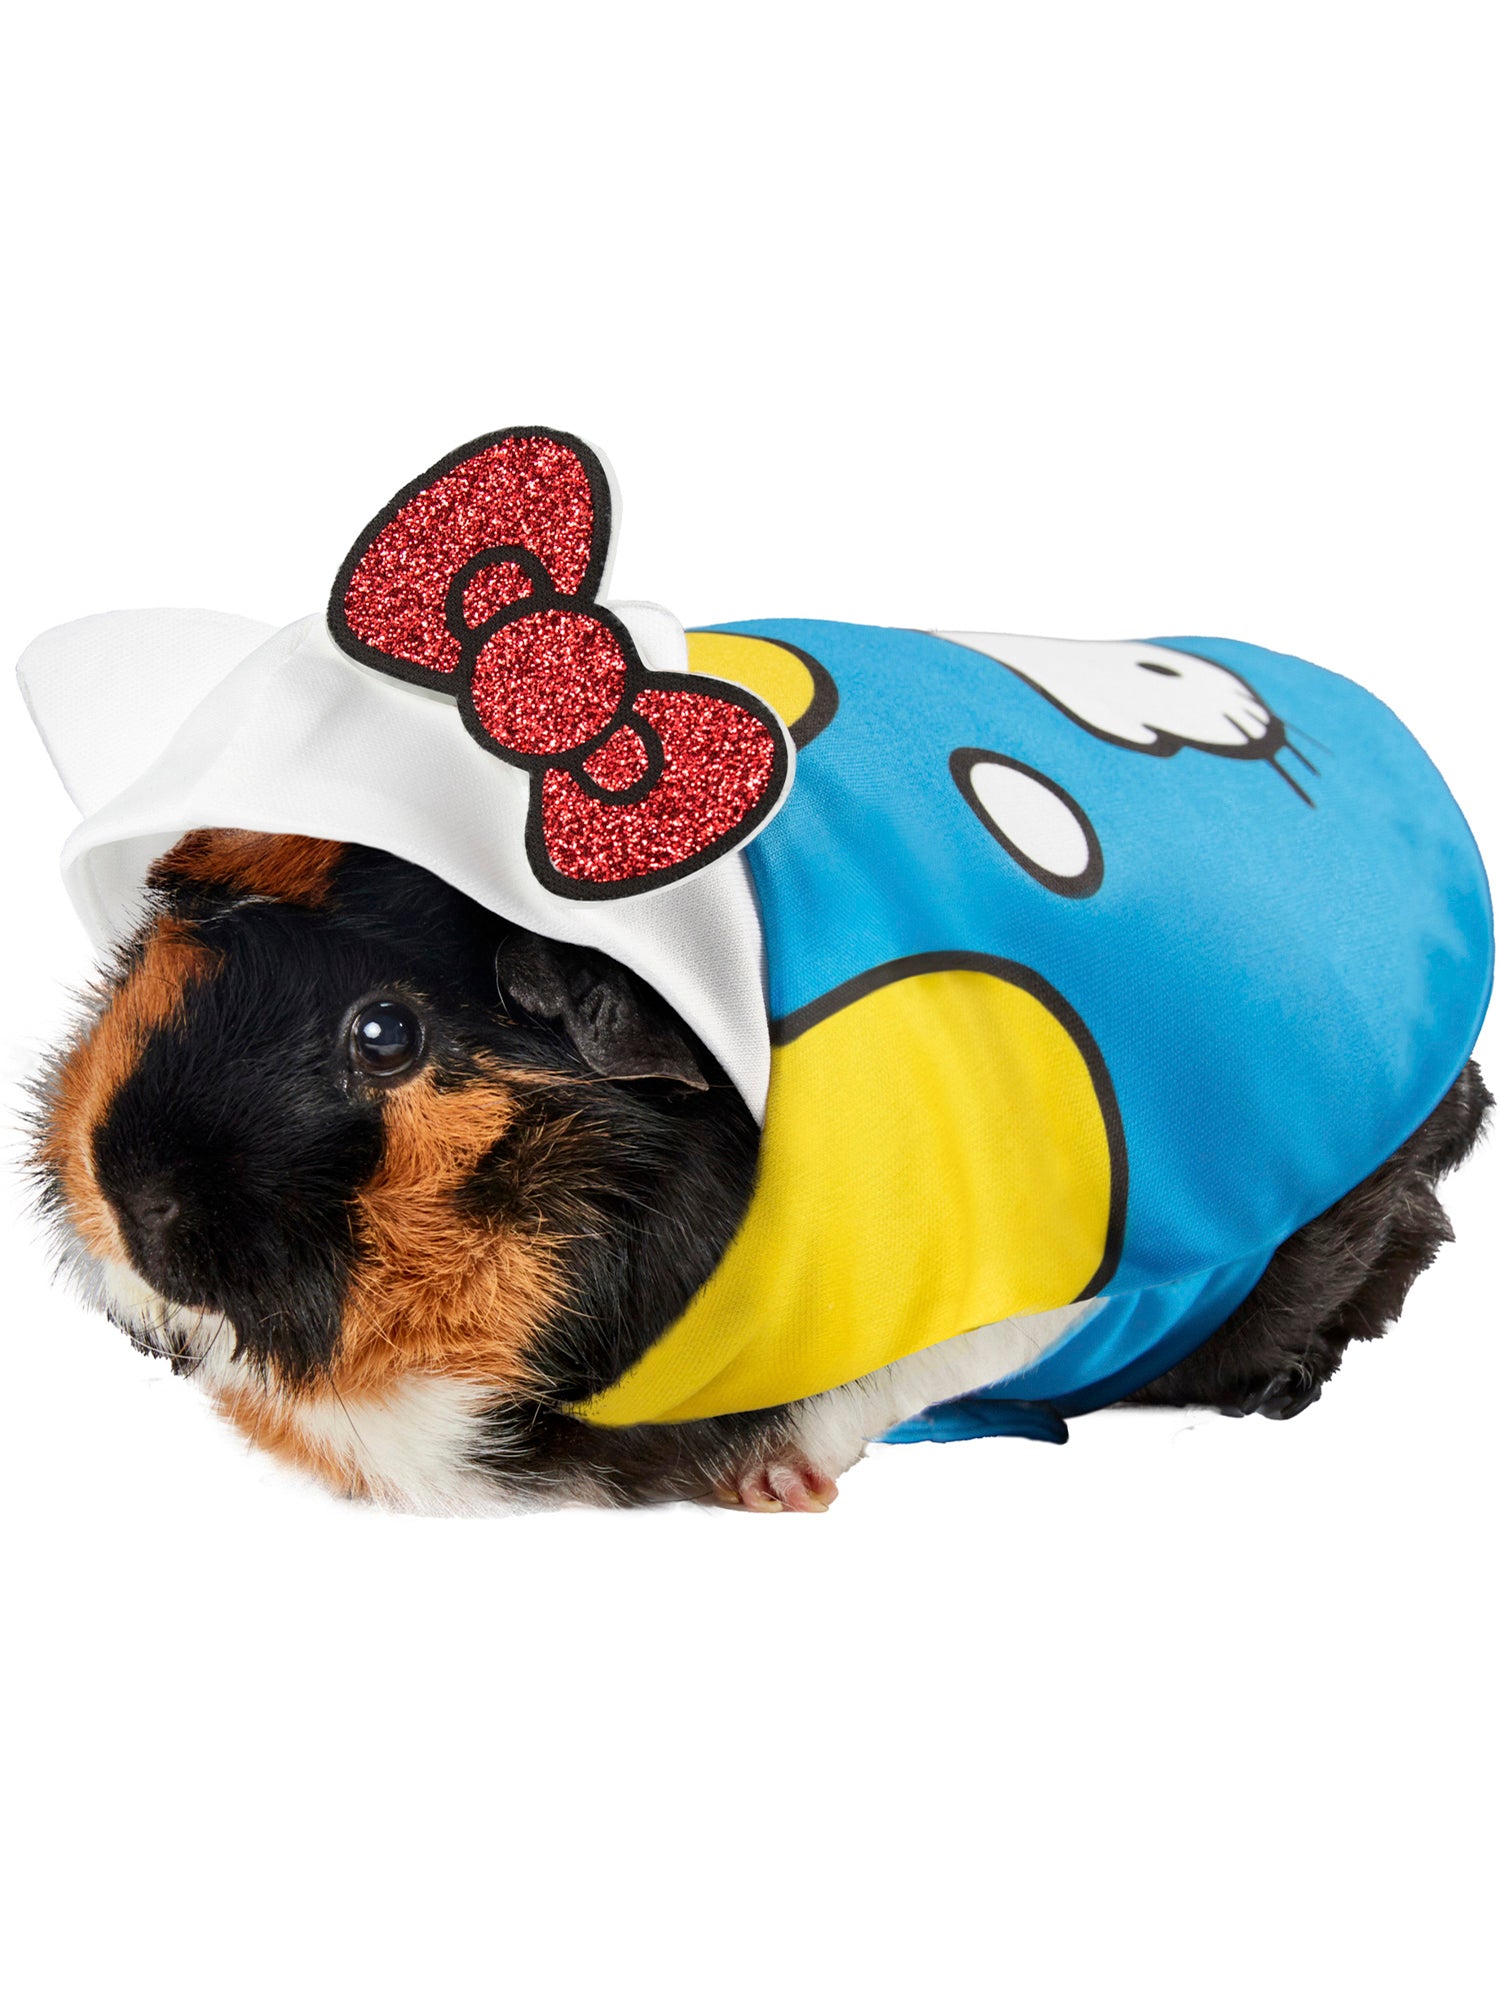 Hello Kitty Small Pet Costume - costumes.com